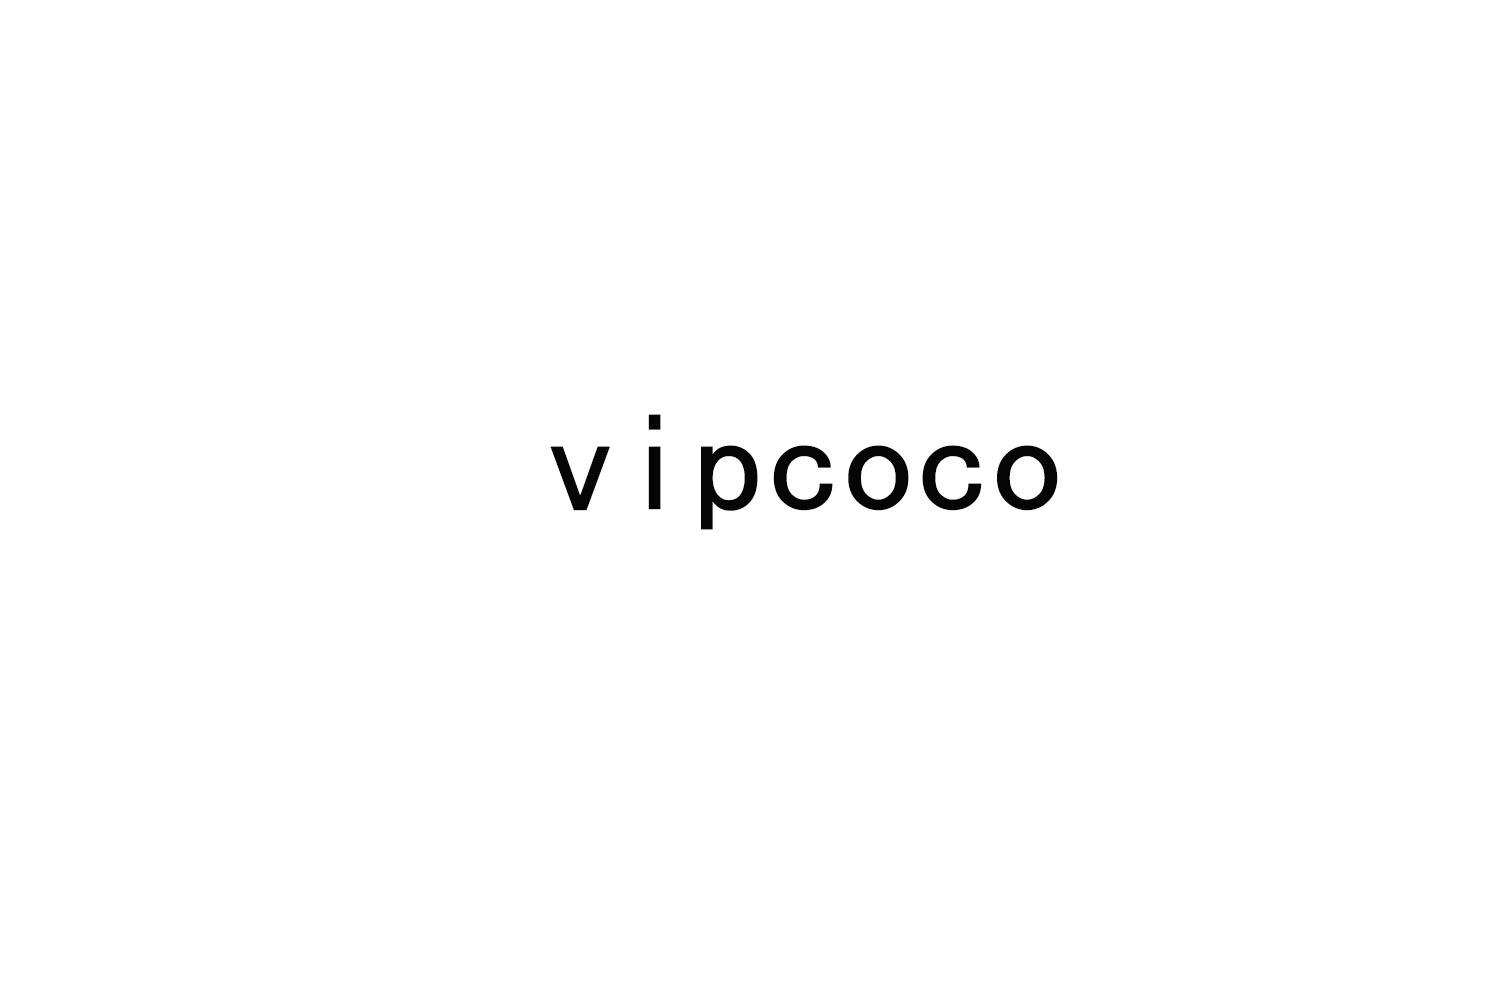 VIPCOCO